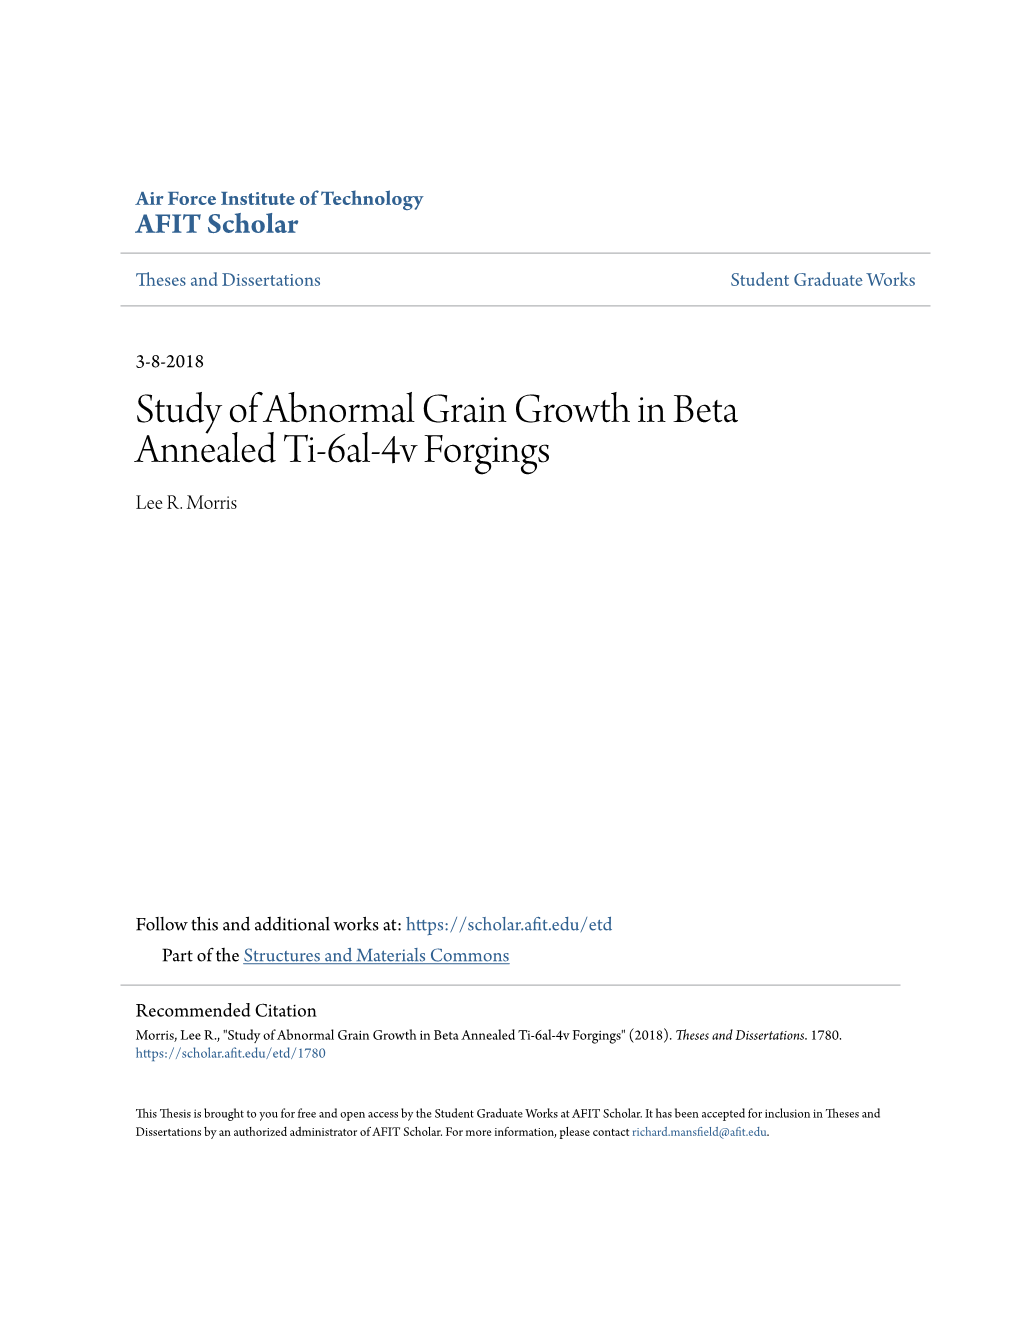 Study of Abnormal Grain Growth in Beta Annealed Ti-6Al-4V Forgings Lee R